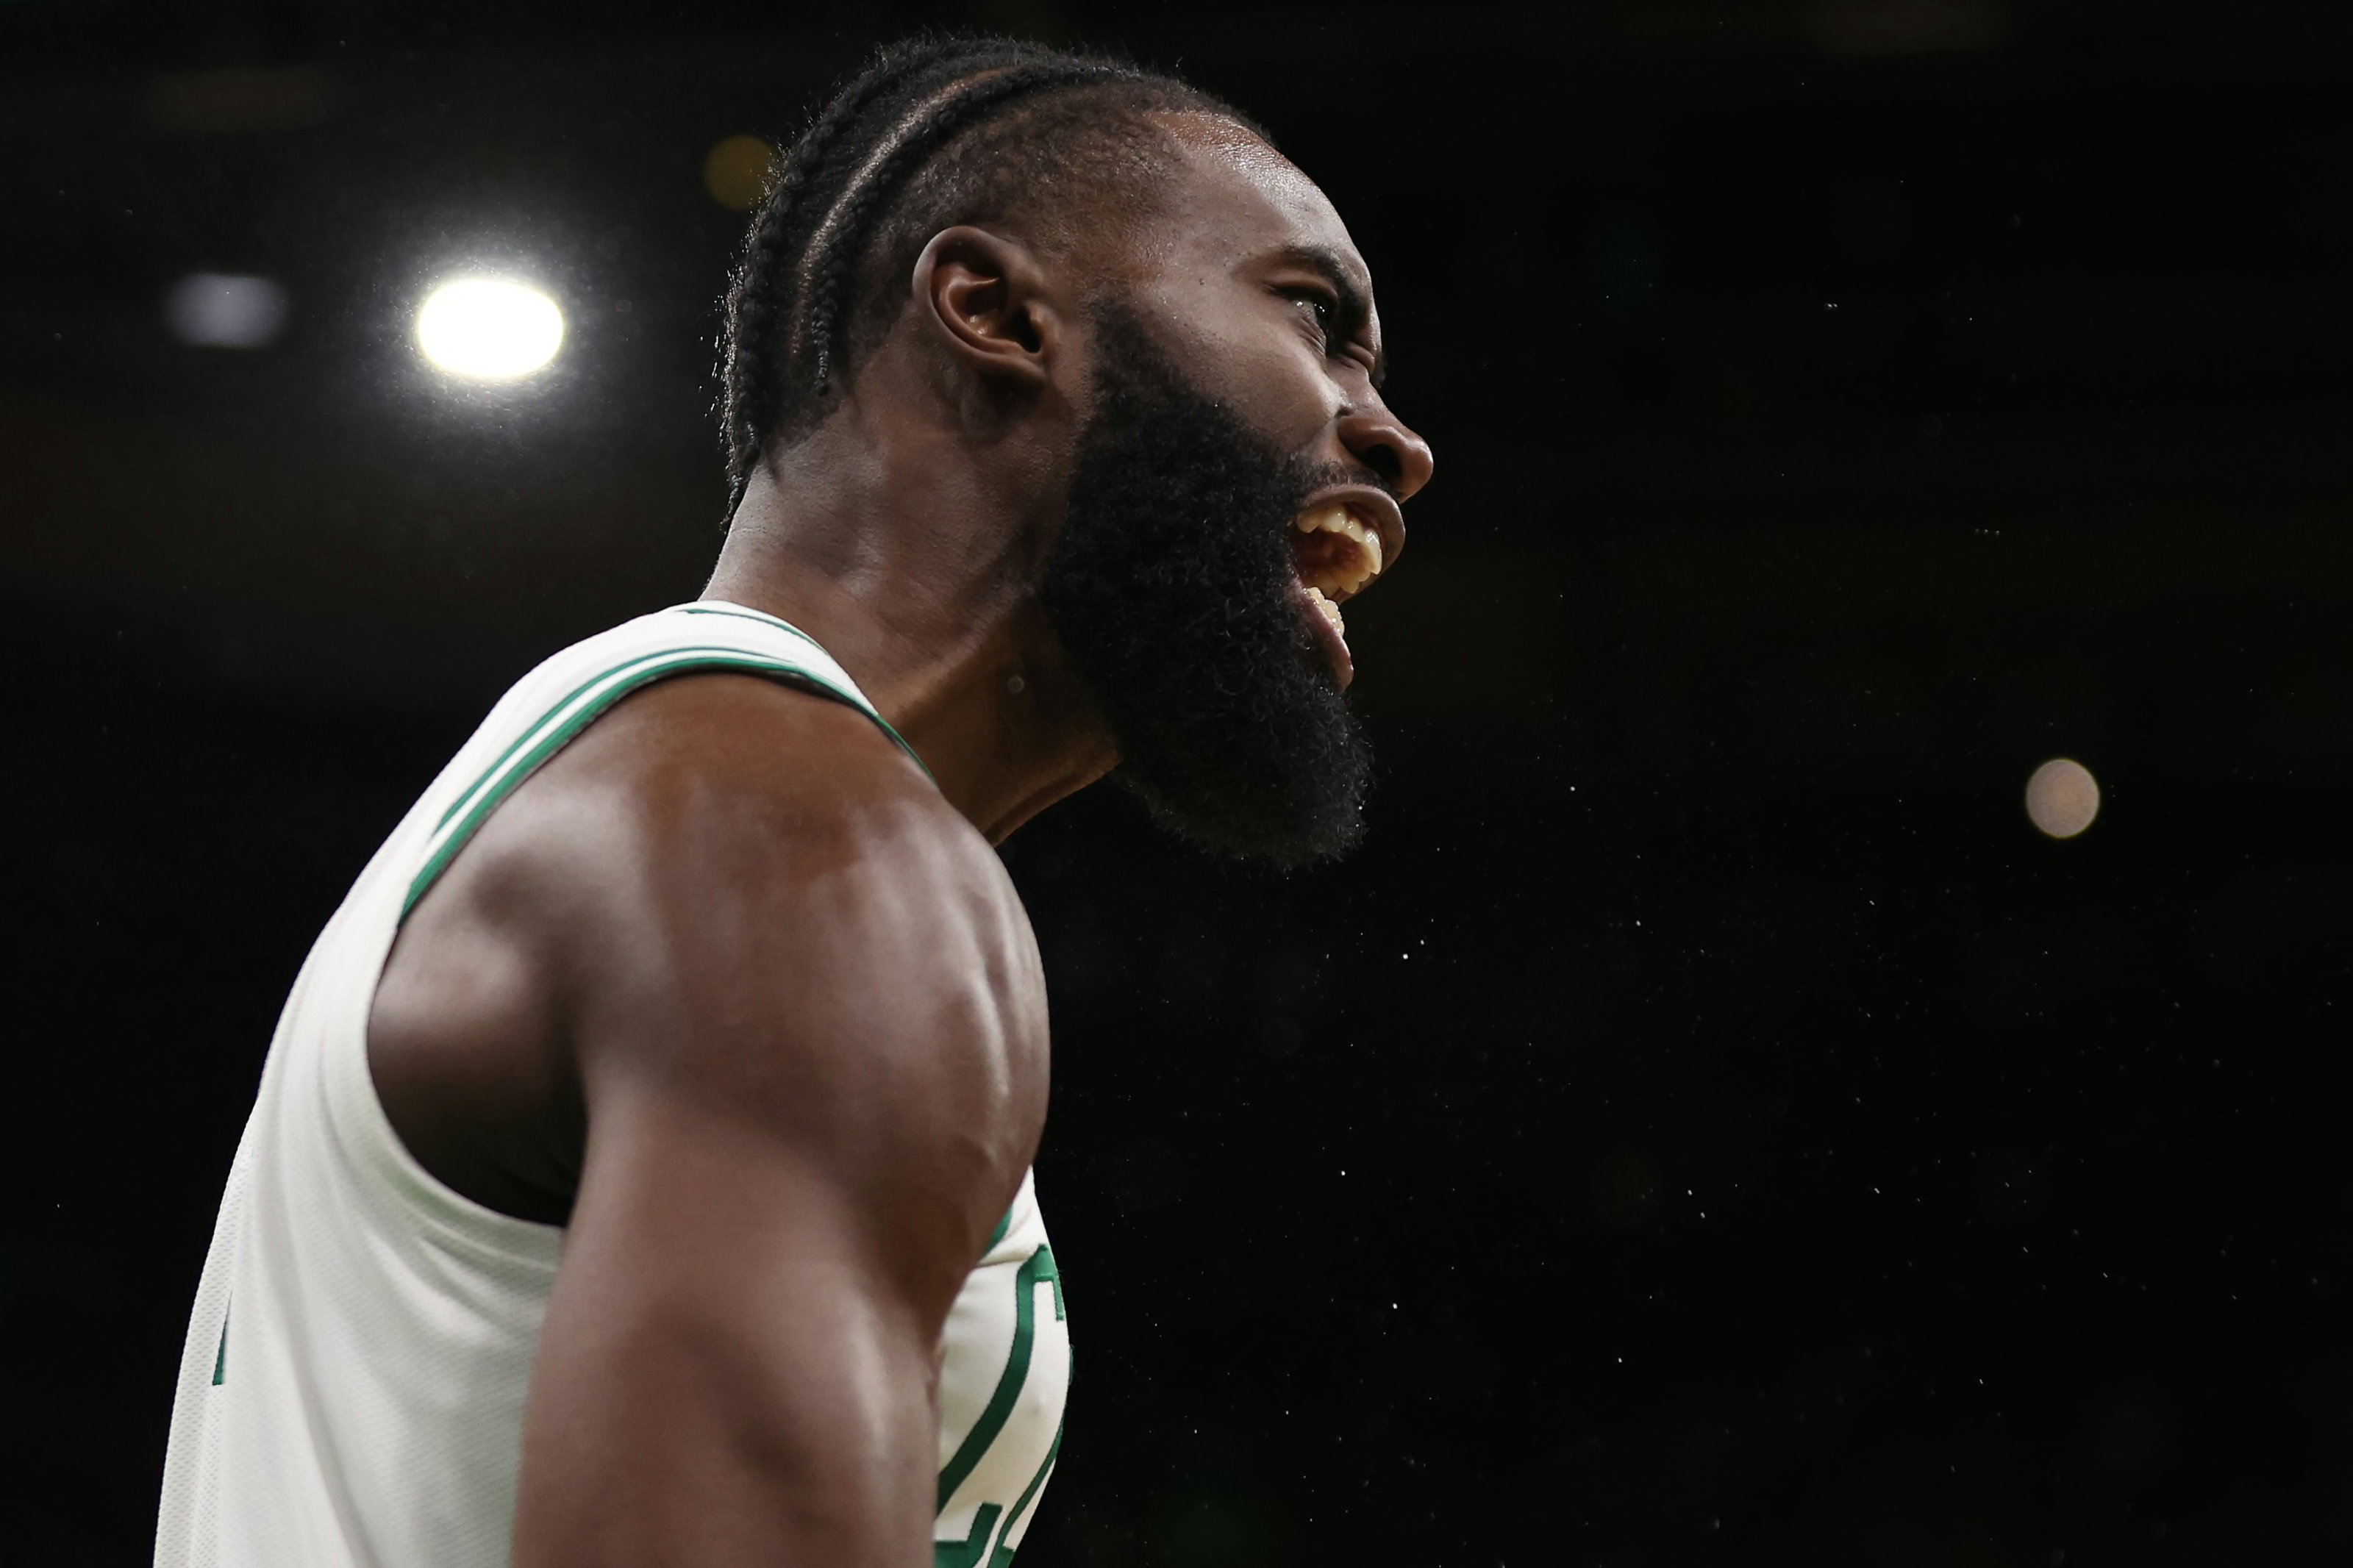 Boston Celtics: Jaylen Brown 2022 Life-Size Foam Core Cutout - Officia